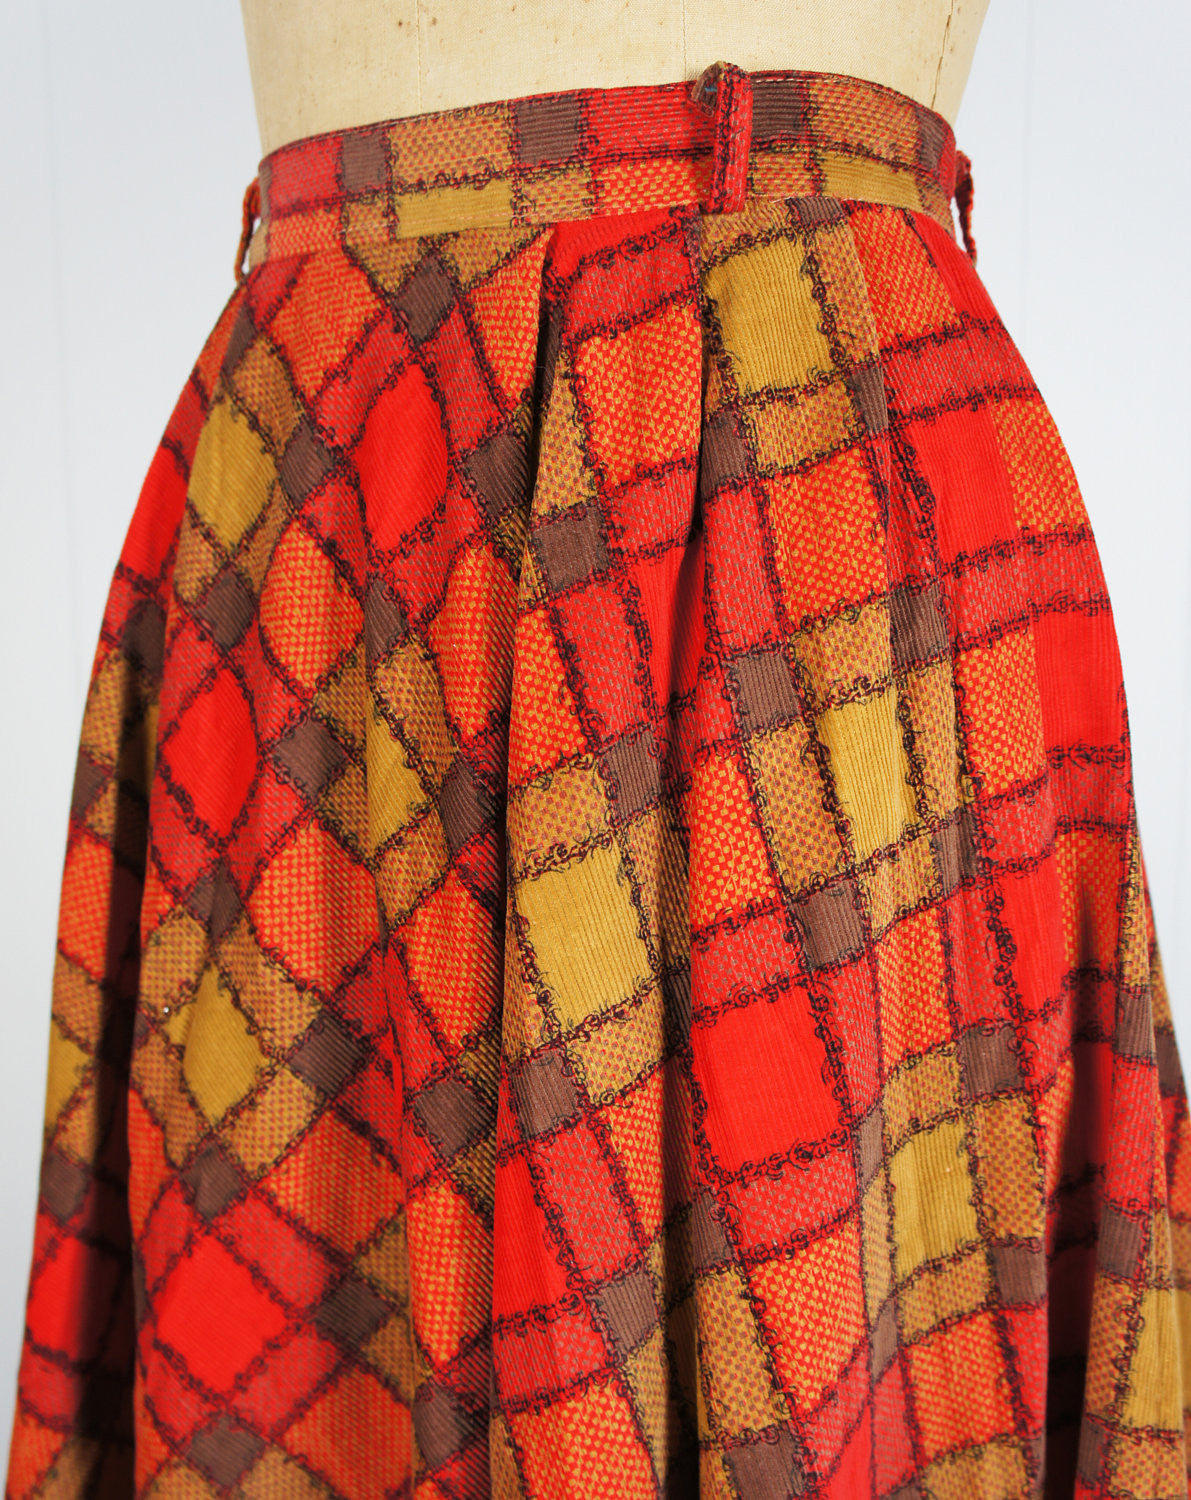 1950's Brown, Red & Tan Corduroy Full Skirt - Size XS